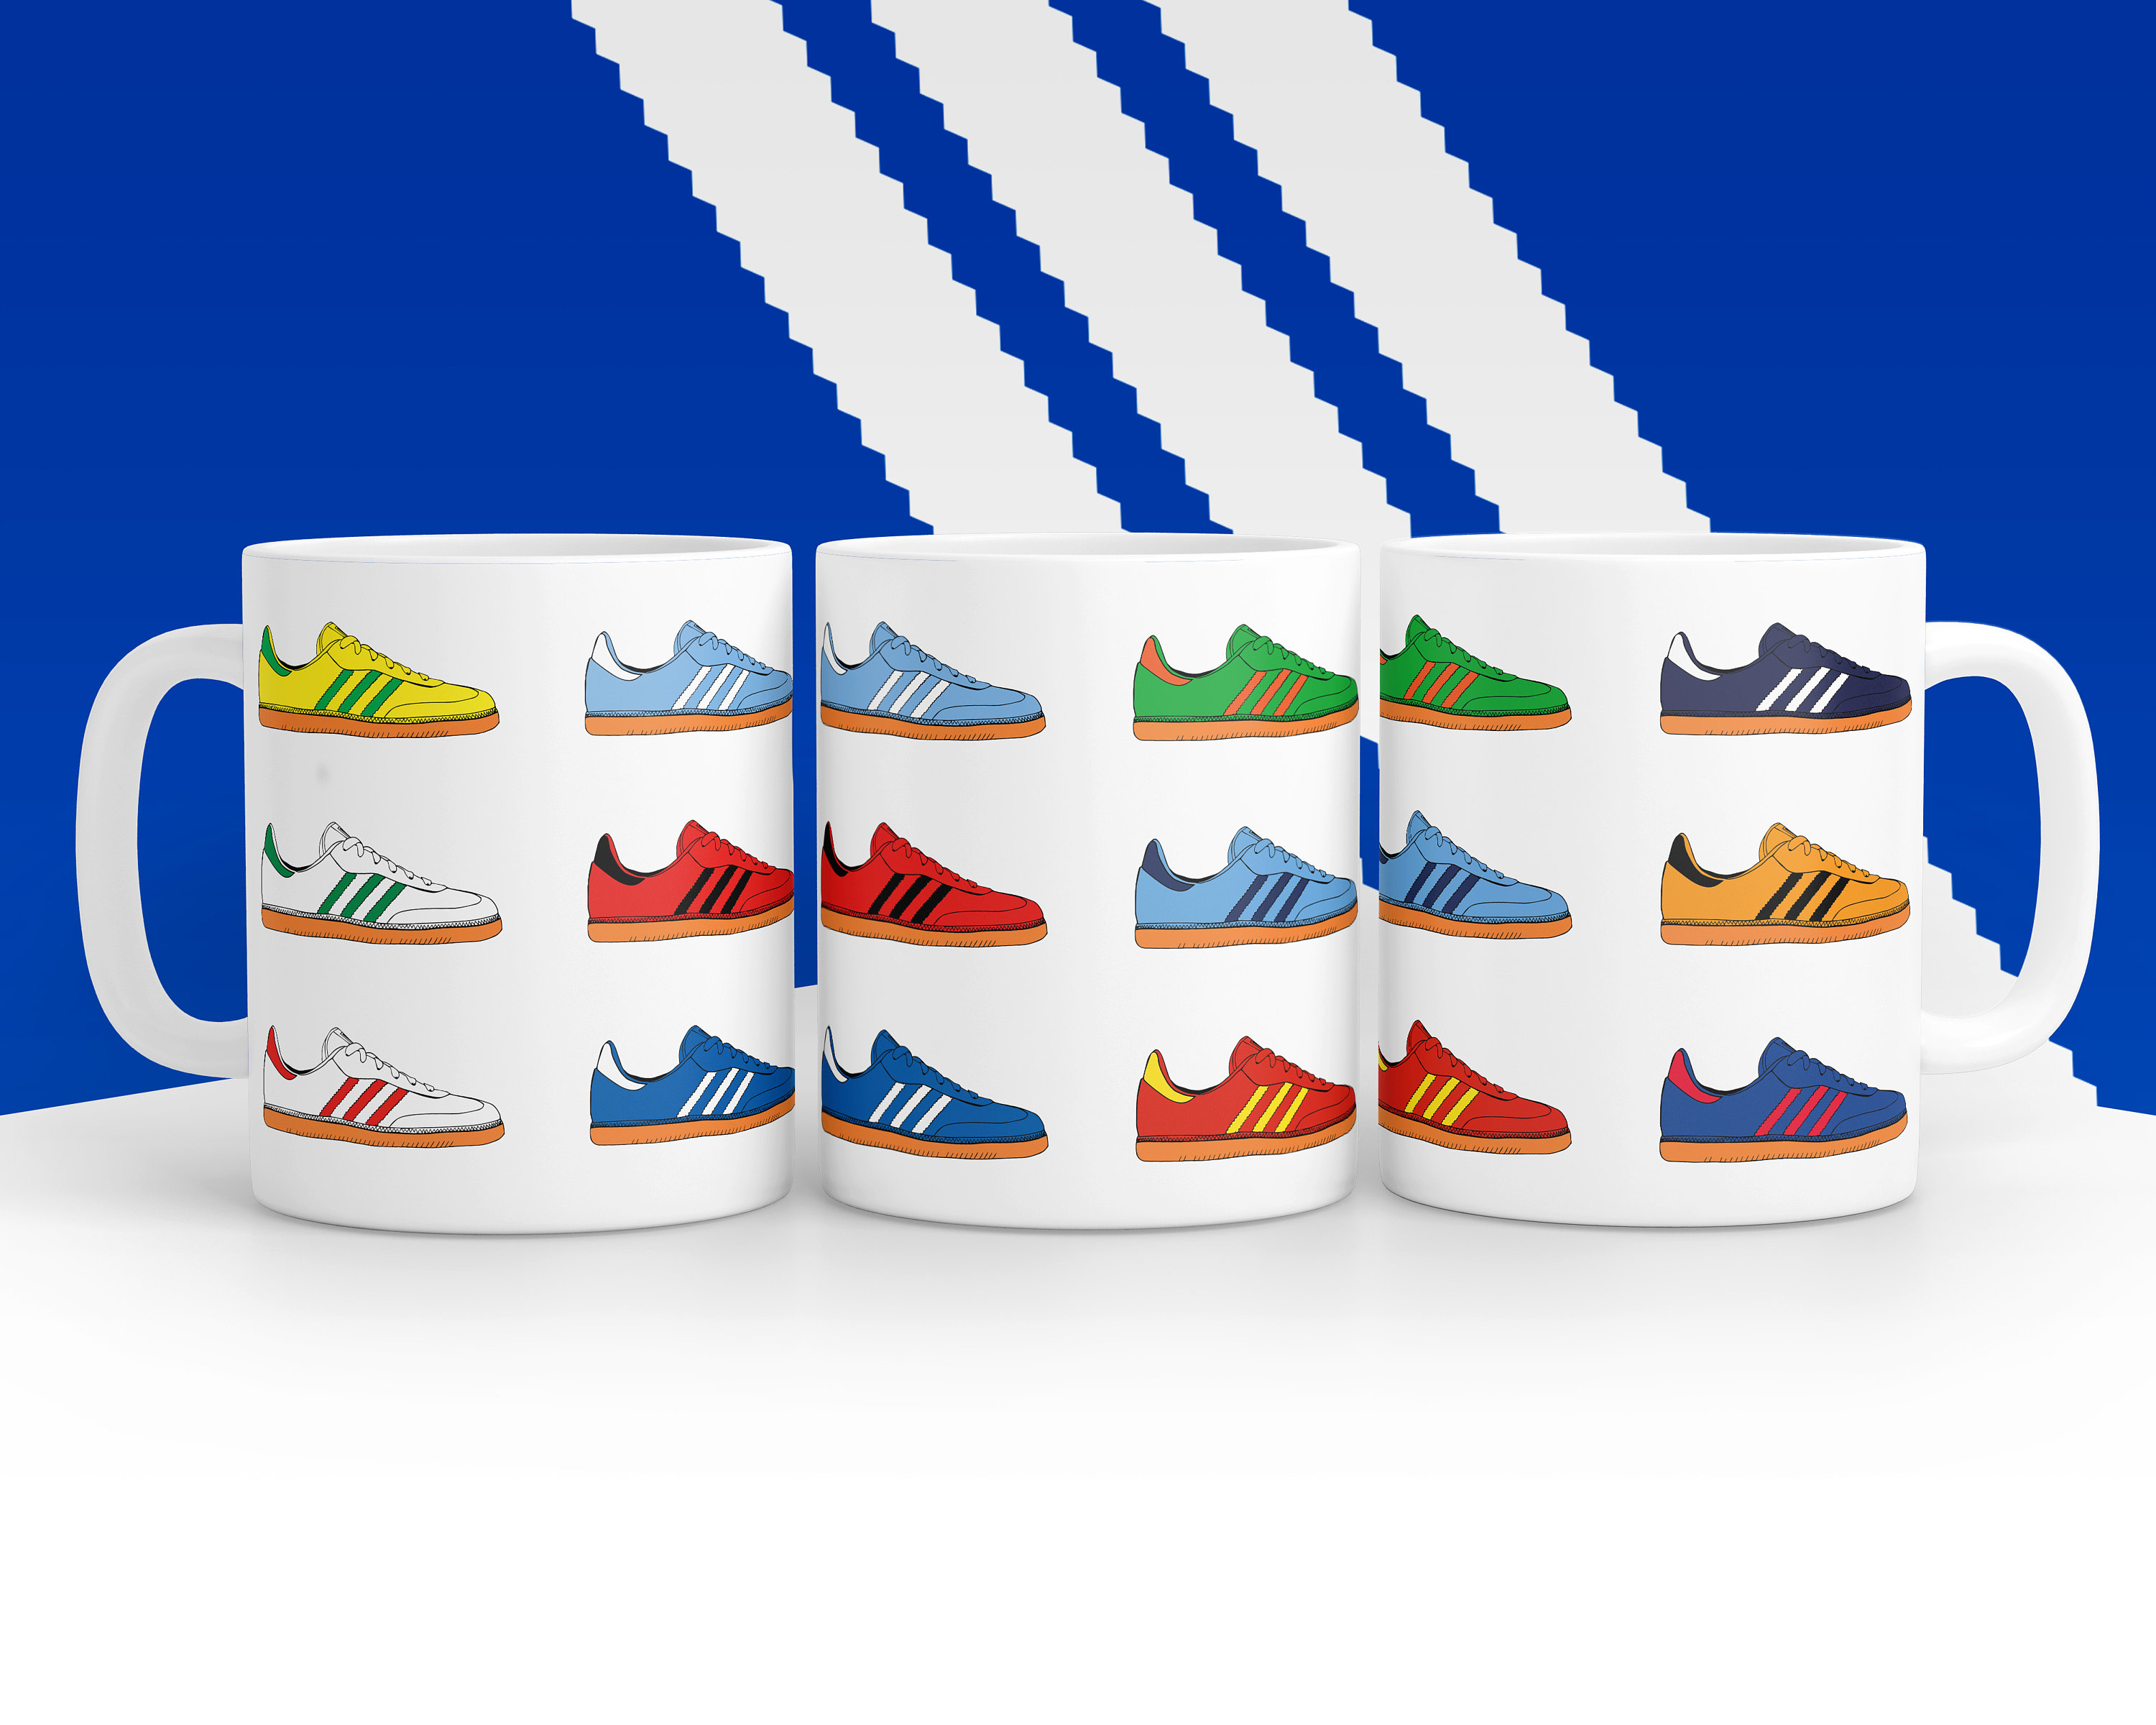 ✓ Authentic Adidas Originals Handball Spezial Mens Shoes White Blue, Size  UK 11